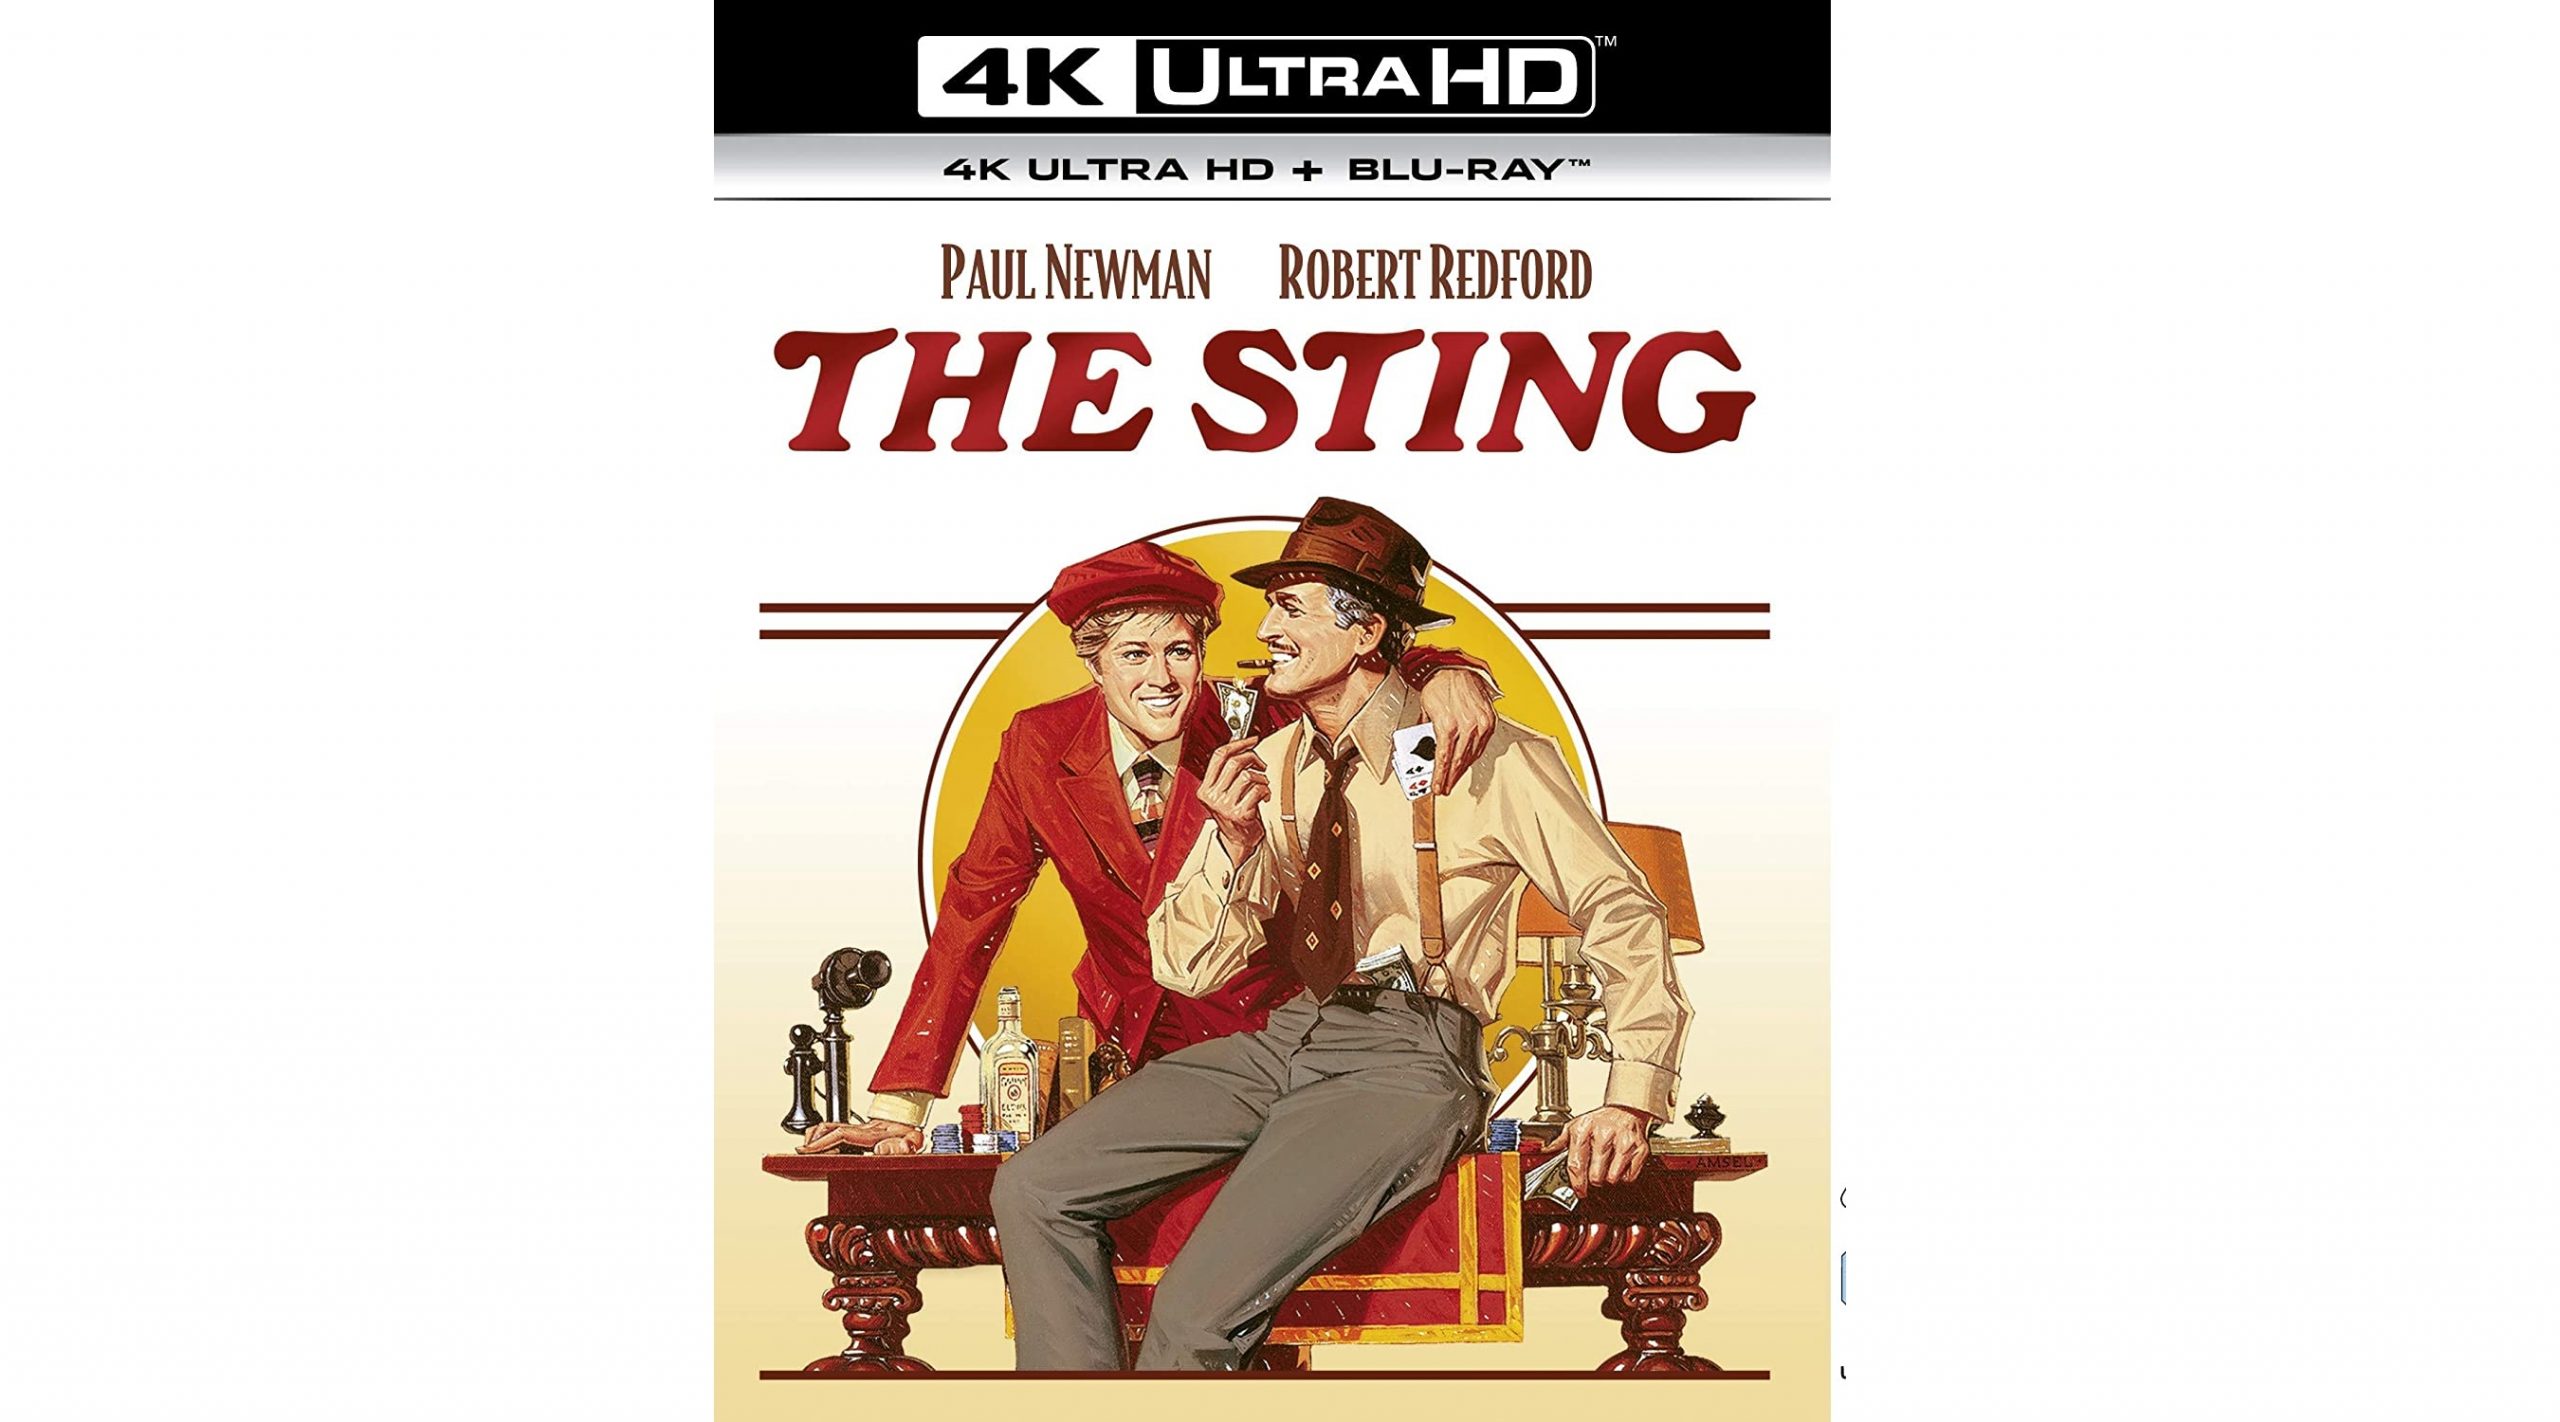 Stiahni si UHD Filmy Podraz / The Sting (1973)(CZ/EN)(4K Ultra HD)[HEVC 2160p BDRip HDR10] = CSFD 90%